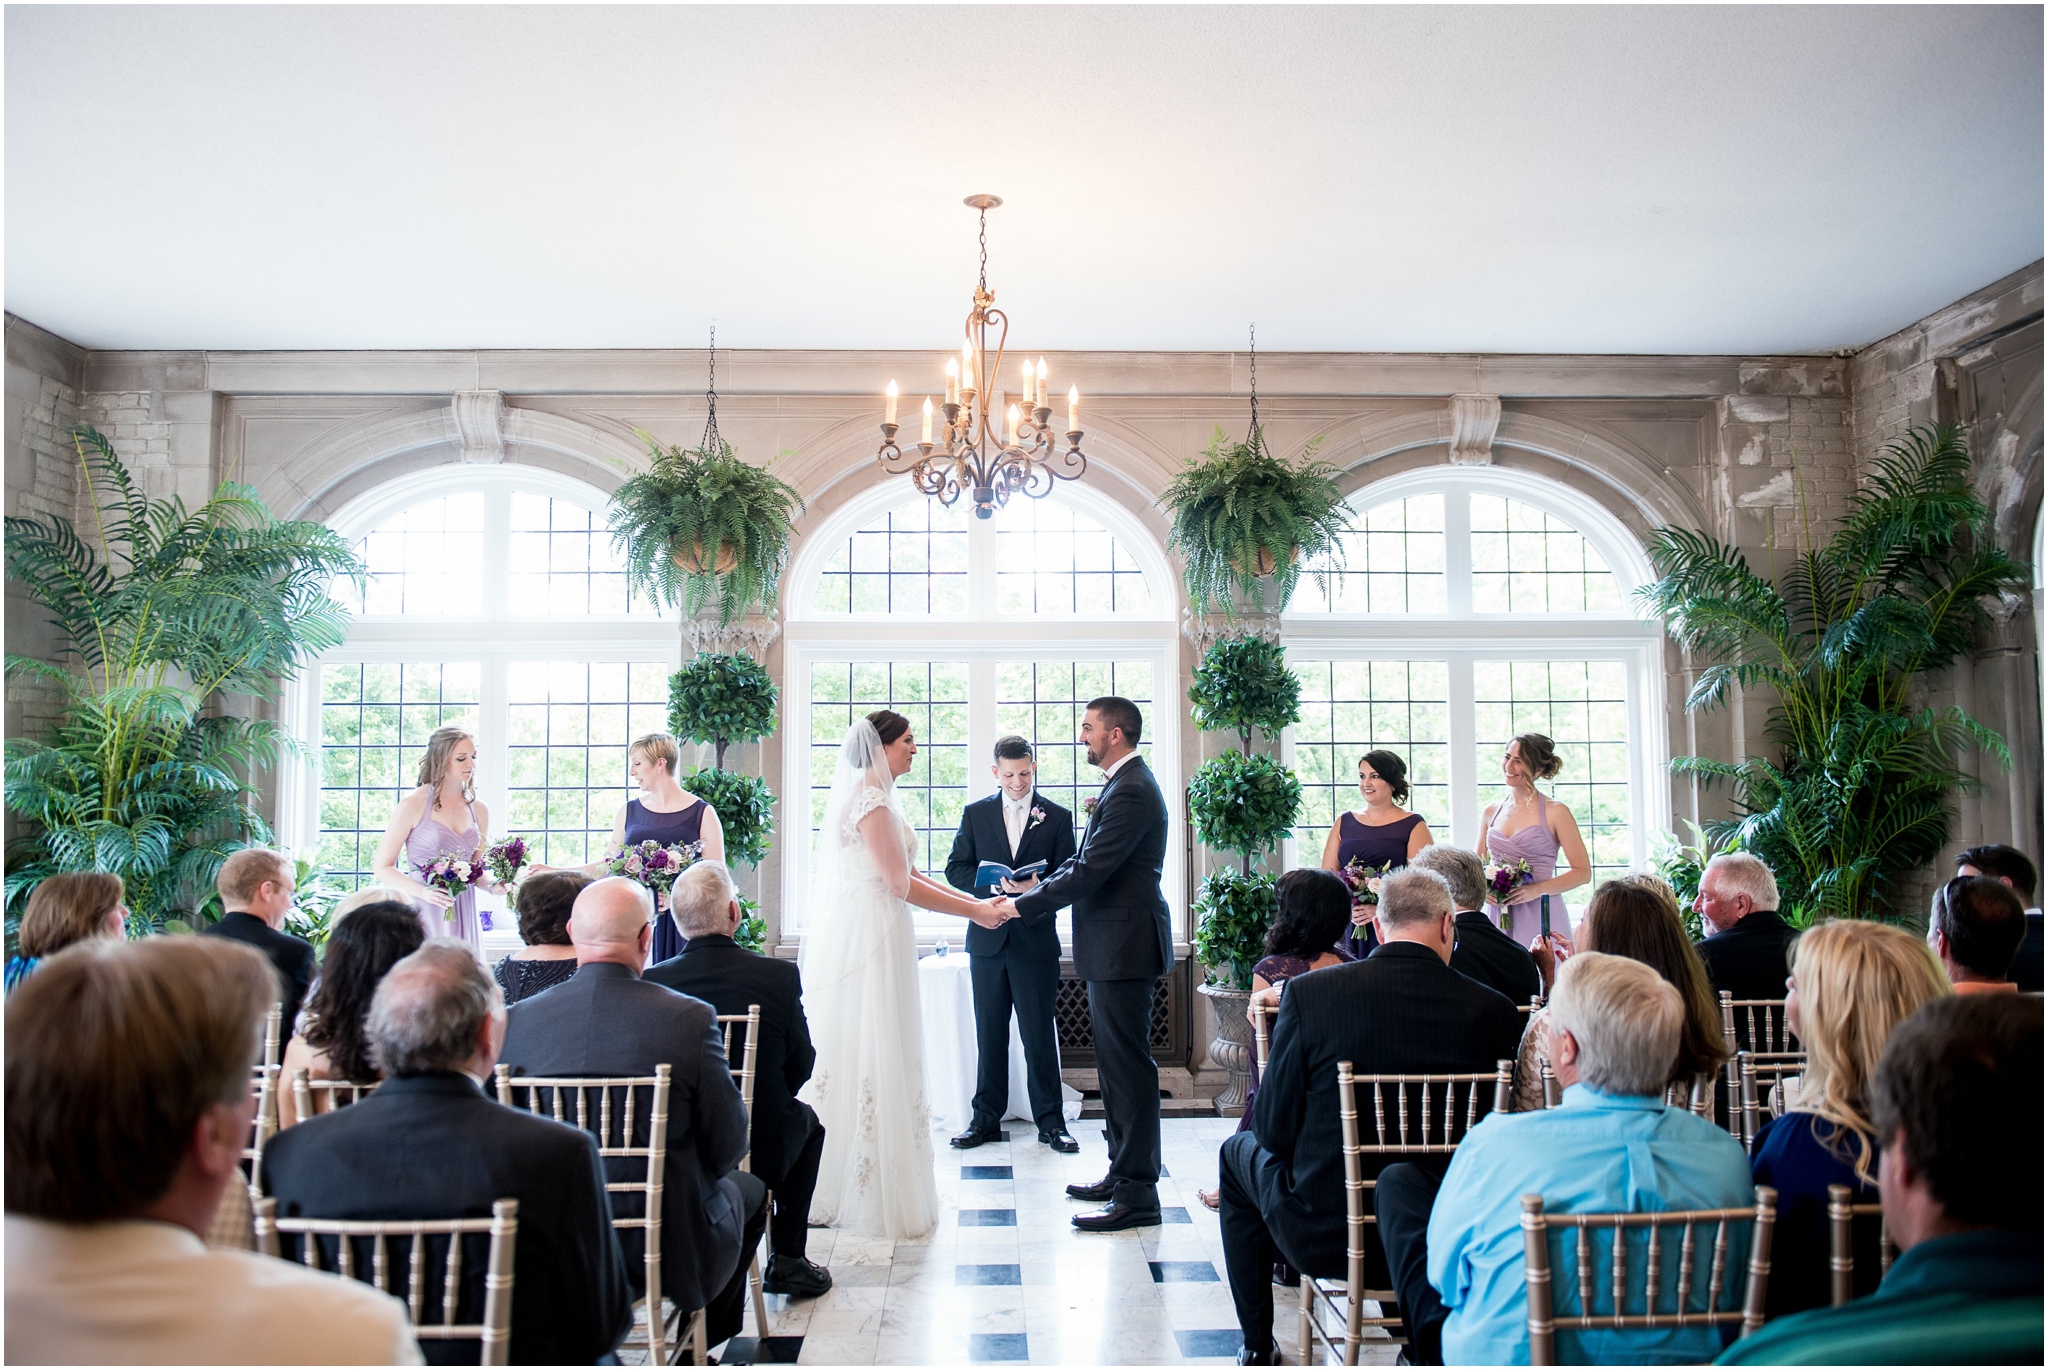 Mark and Alyssa | Laurel Hall Wedding | Indianapolis, IN | Purple wedding details | Woven Blooms Florist